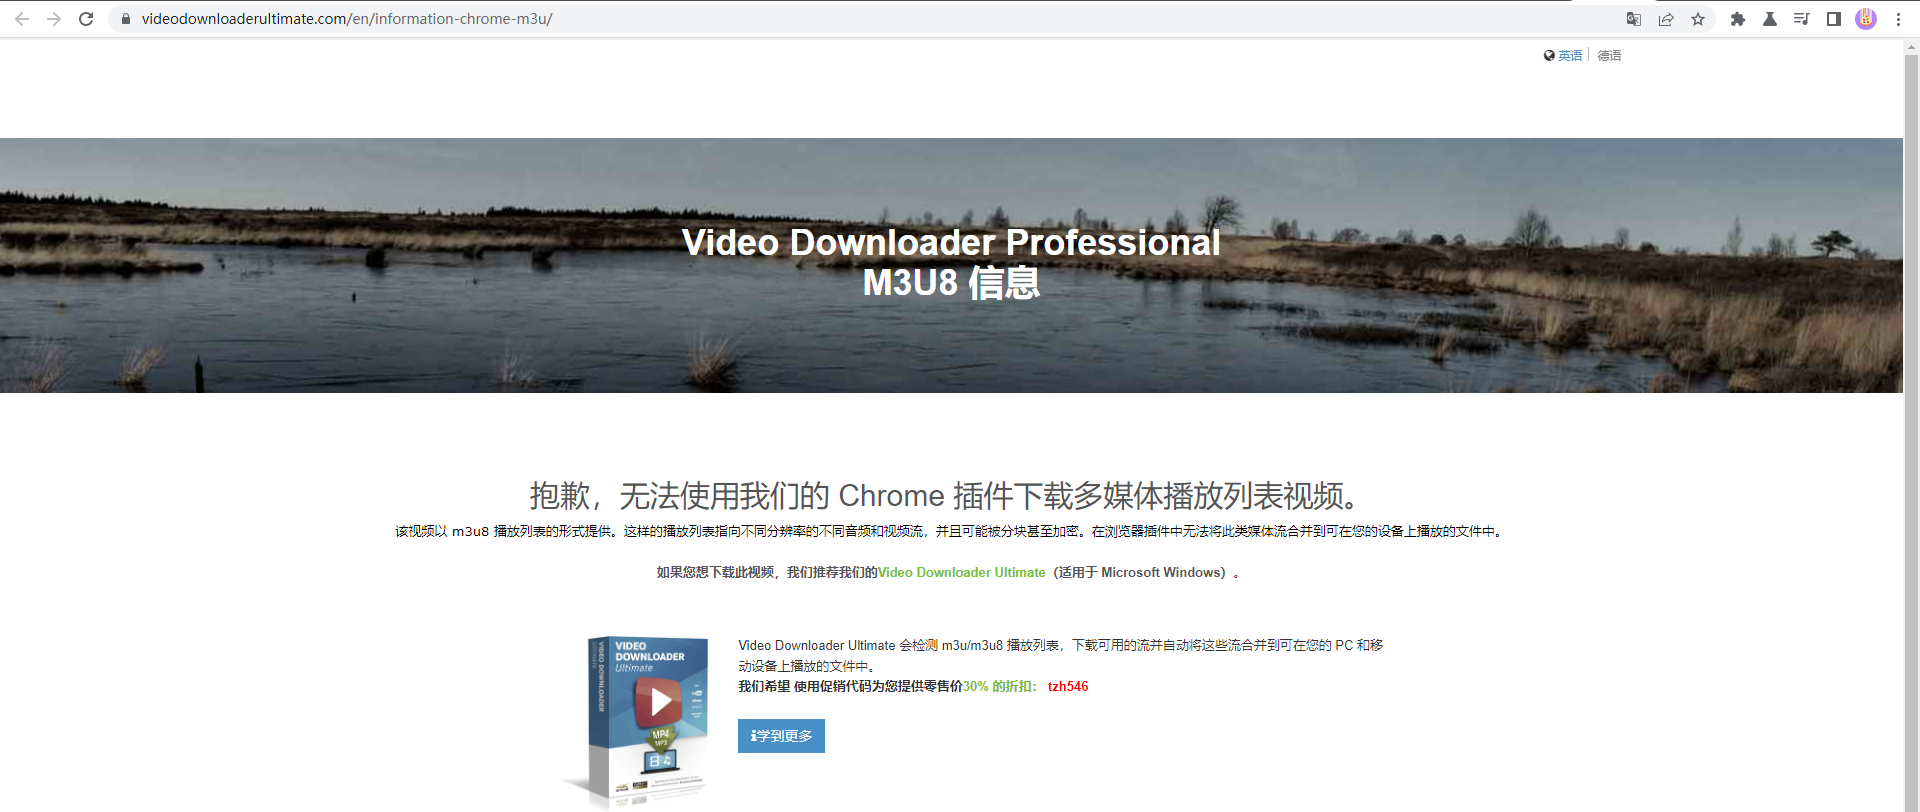 Video Downloader professional 插件使用教程